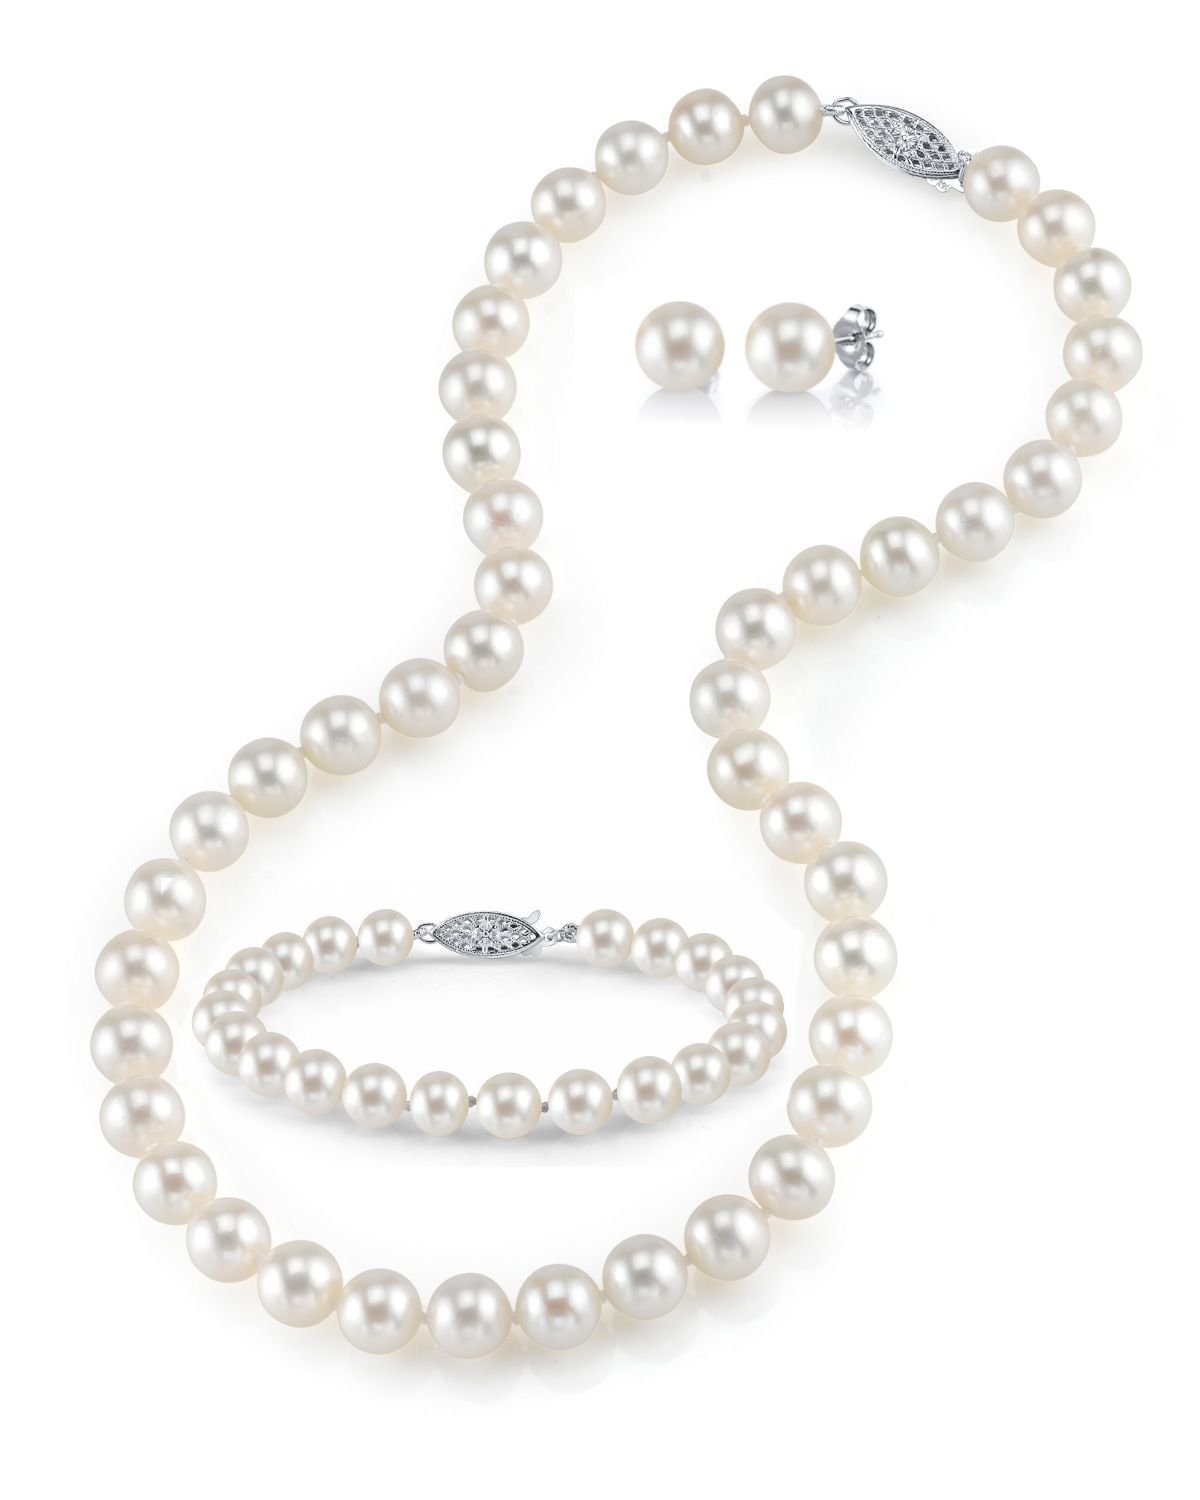 COMPETE99% Original Pearl Necklace-